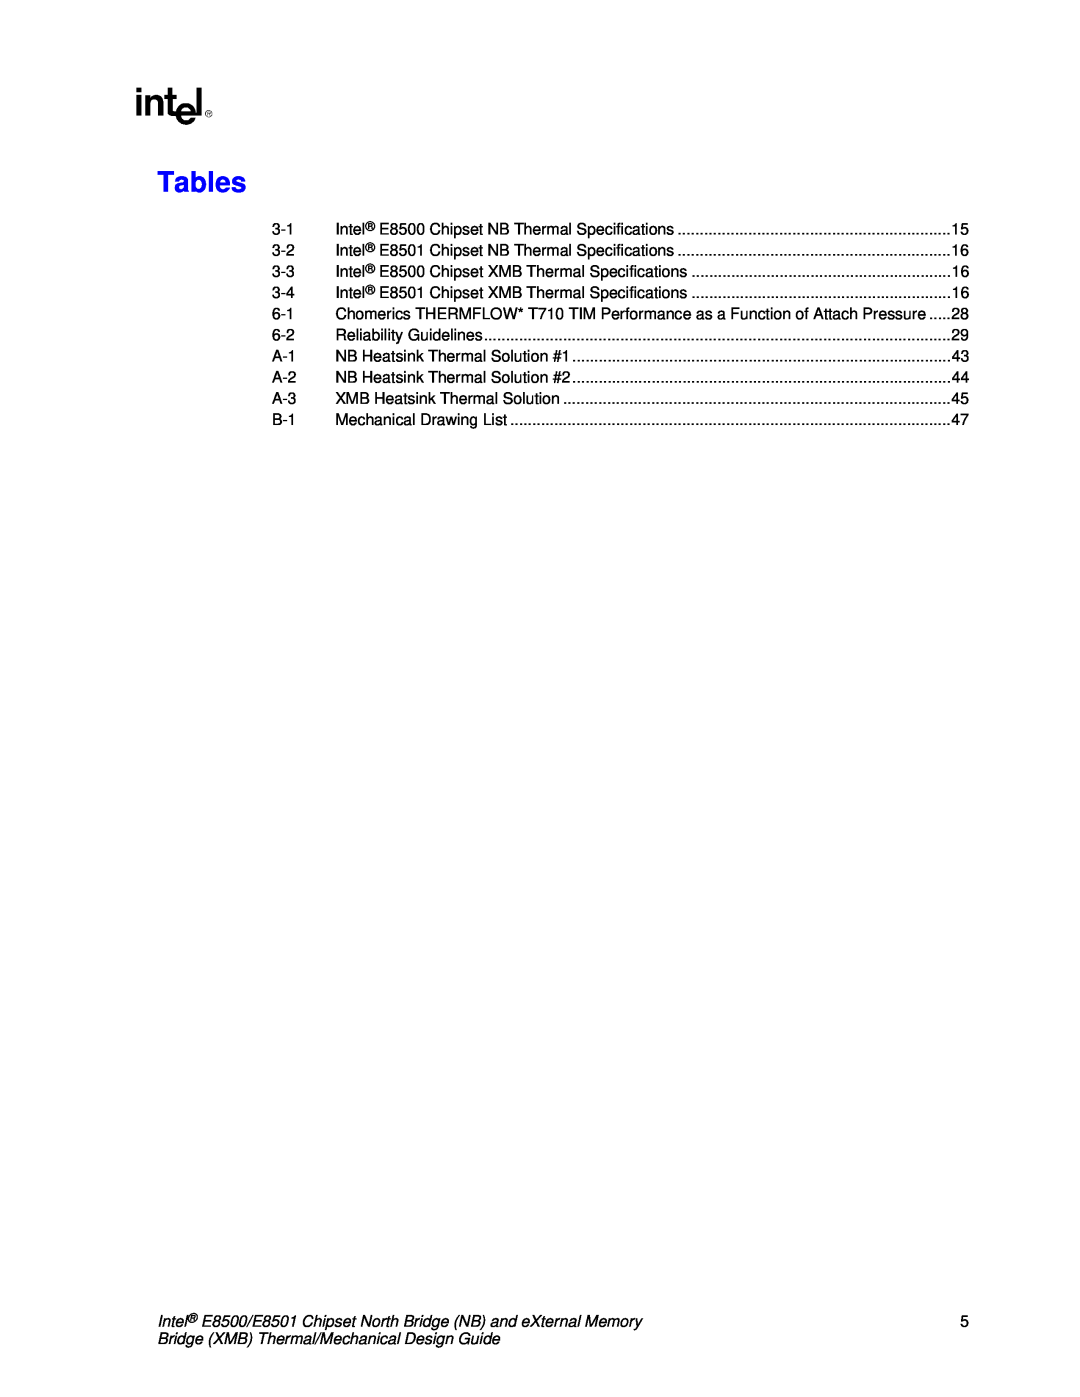 Intel E8501 manual Tables, Bridge XMB Thermal/Mechanical Design Guide 